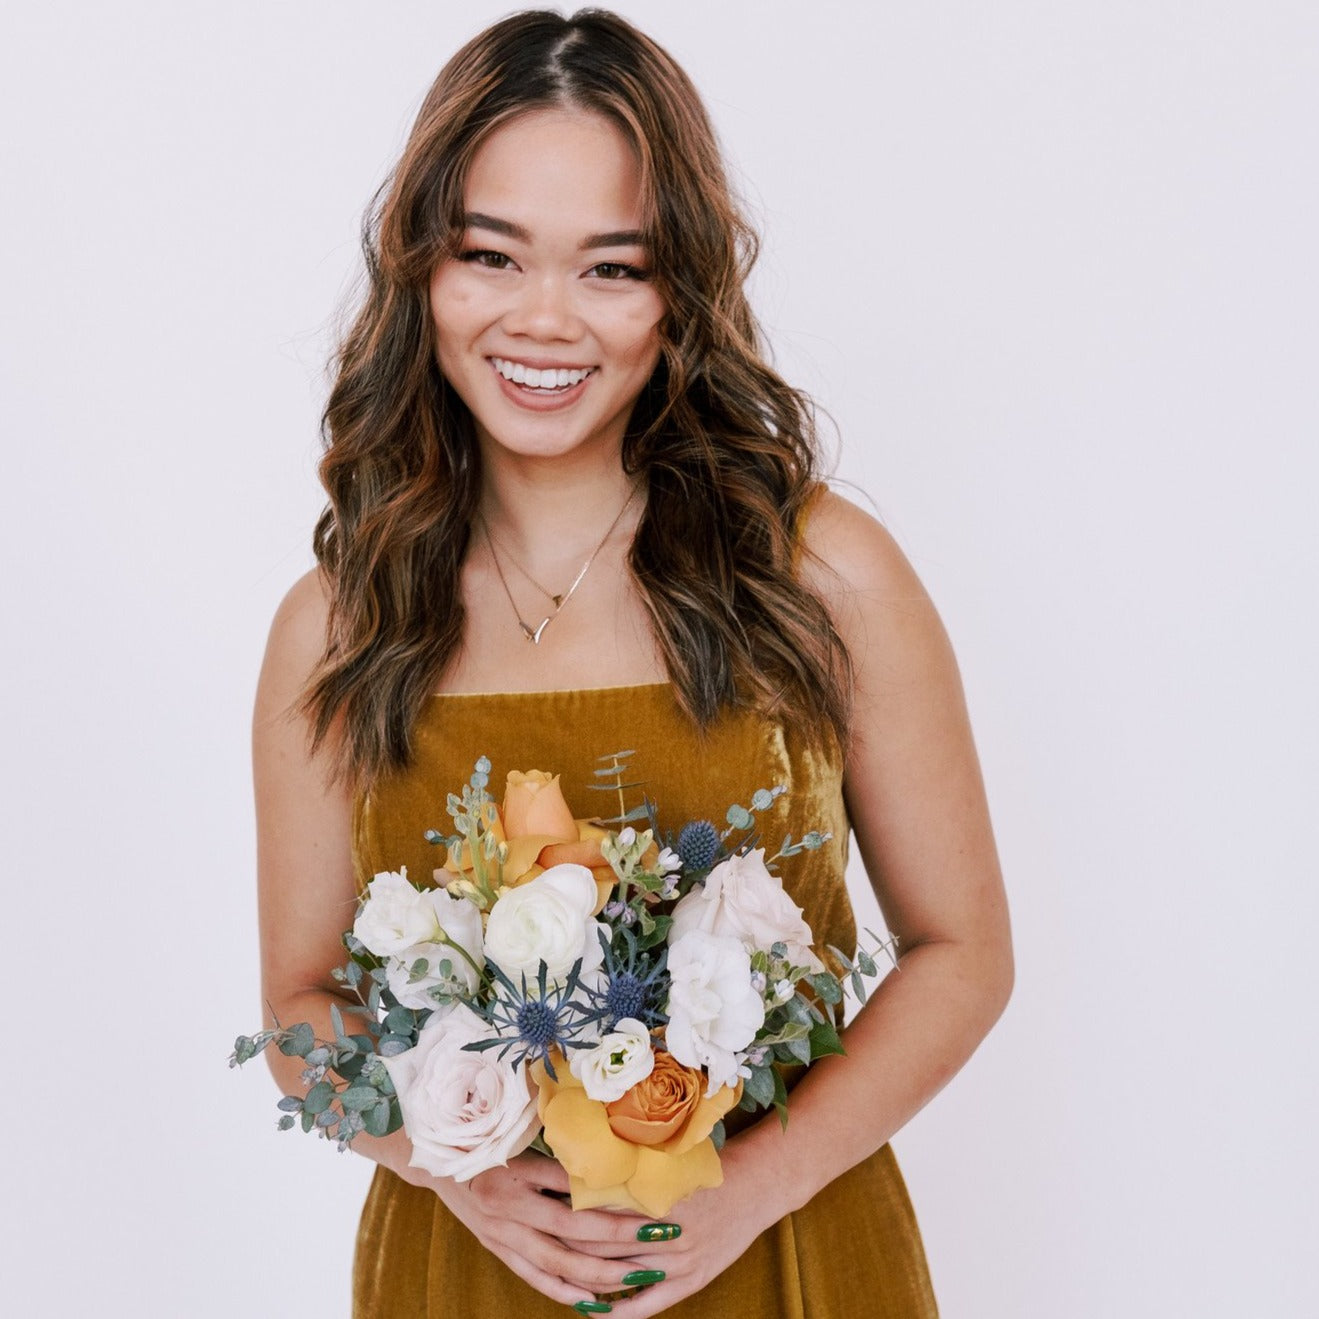 Mustard, Blue, and Dusty Blush Bridal Bouquet for DIY Wedding Flowers